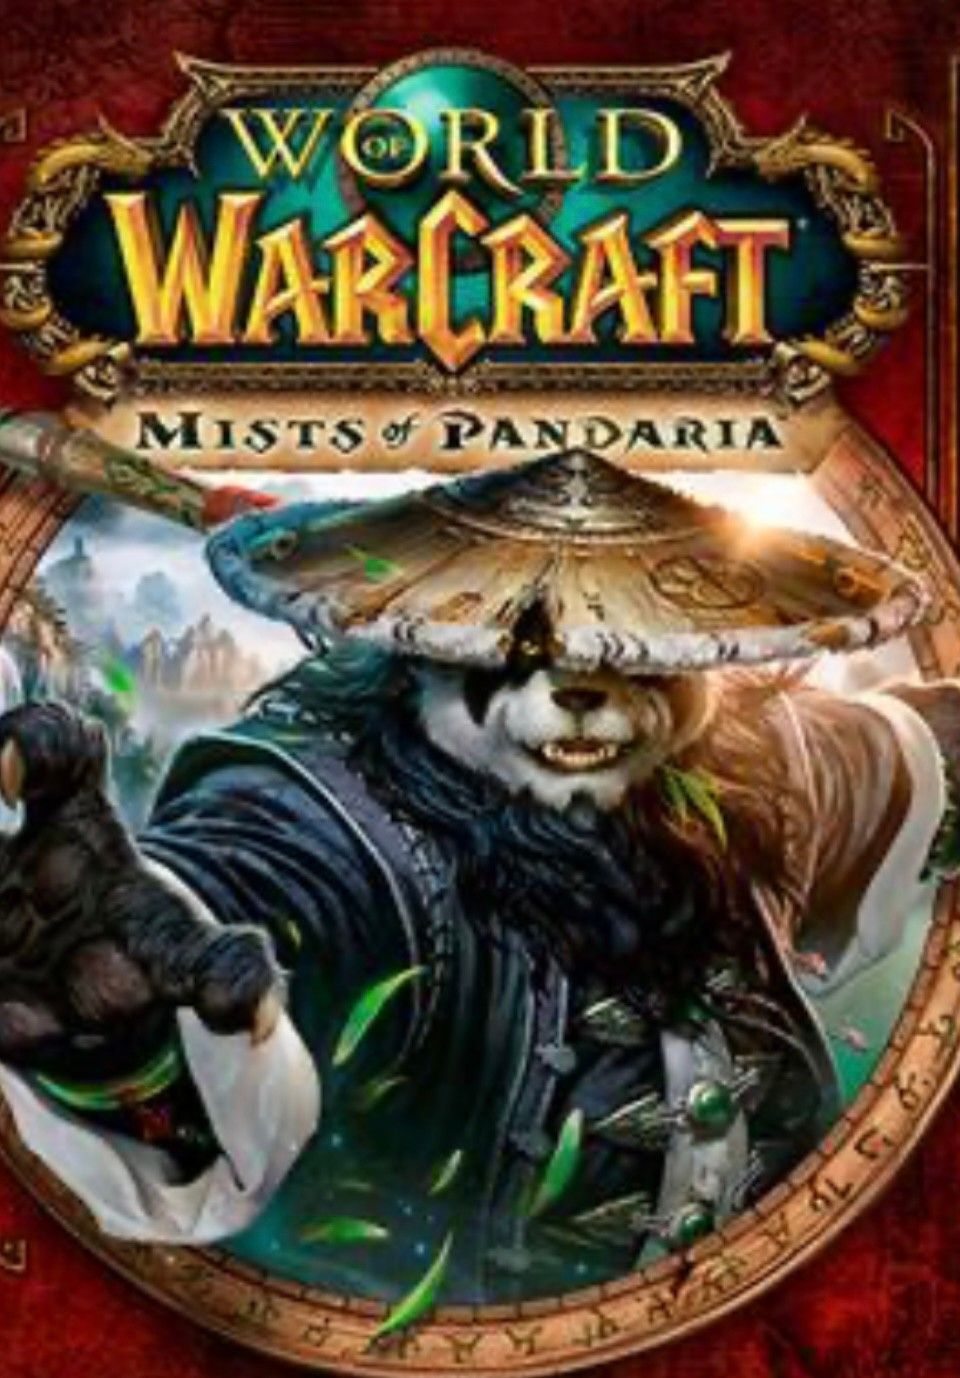 Mist of pandaria- on world warcraft